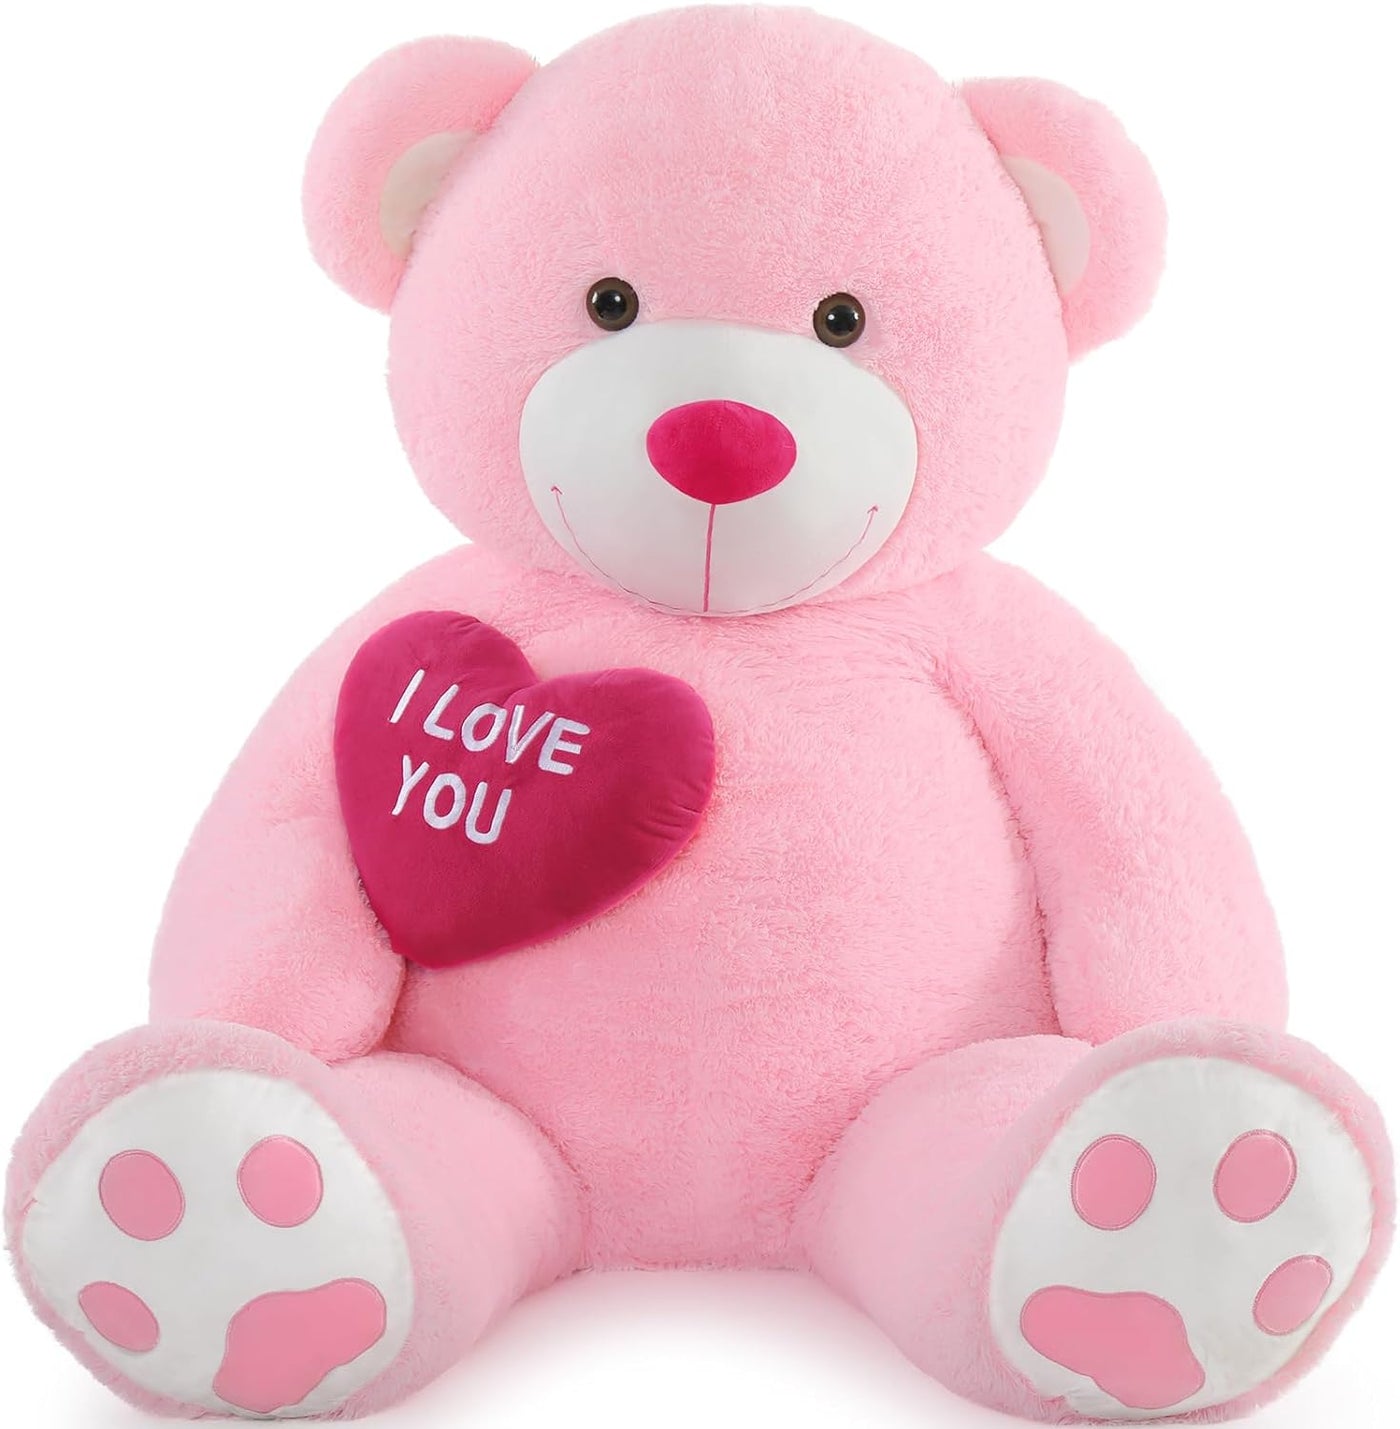 Giant Pink Teddy Bear Stuffed Animals — MorisMos Stuffed Animals